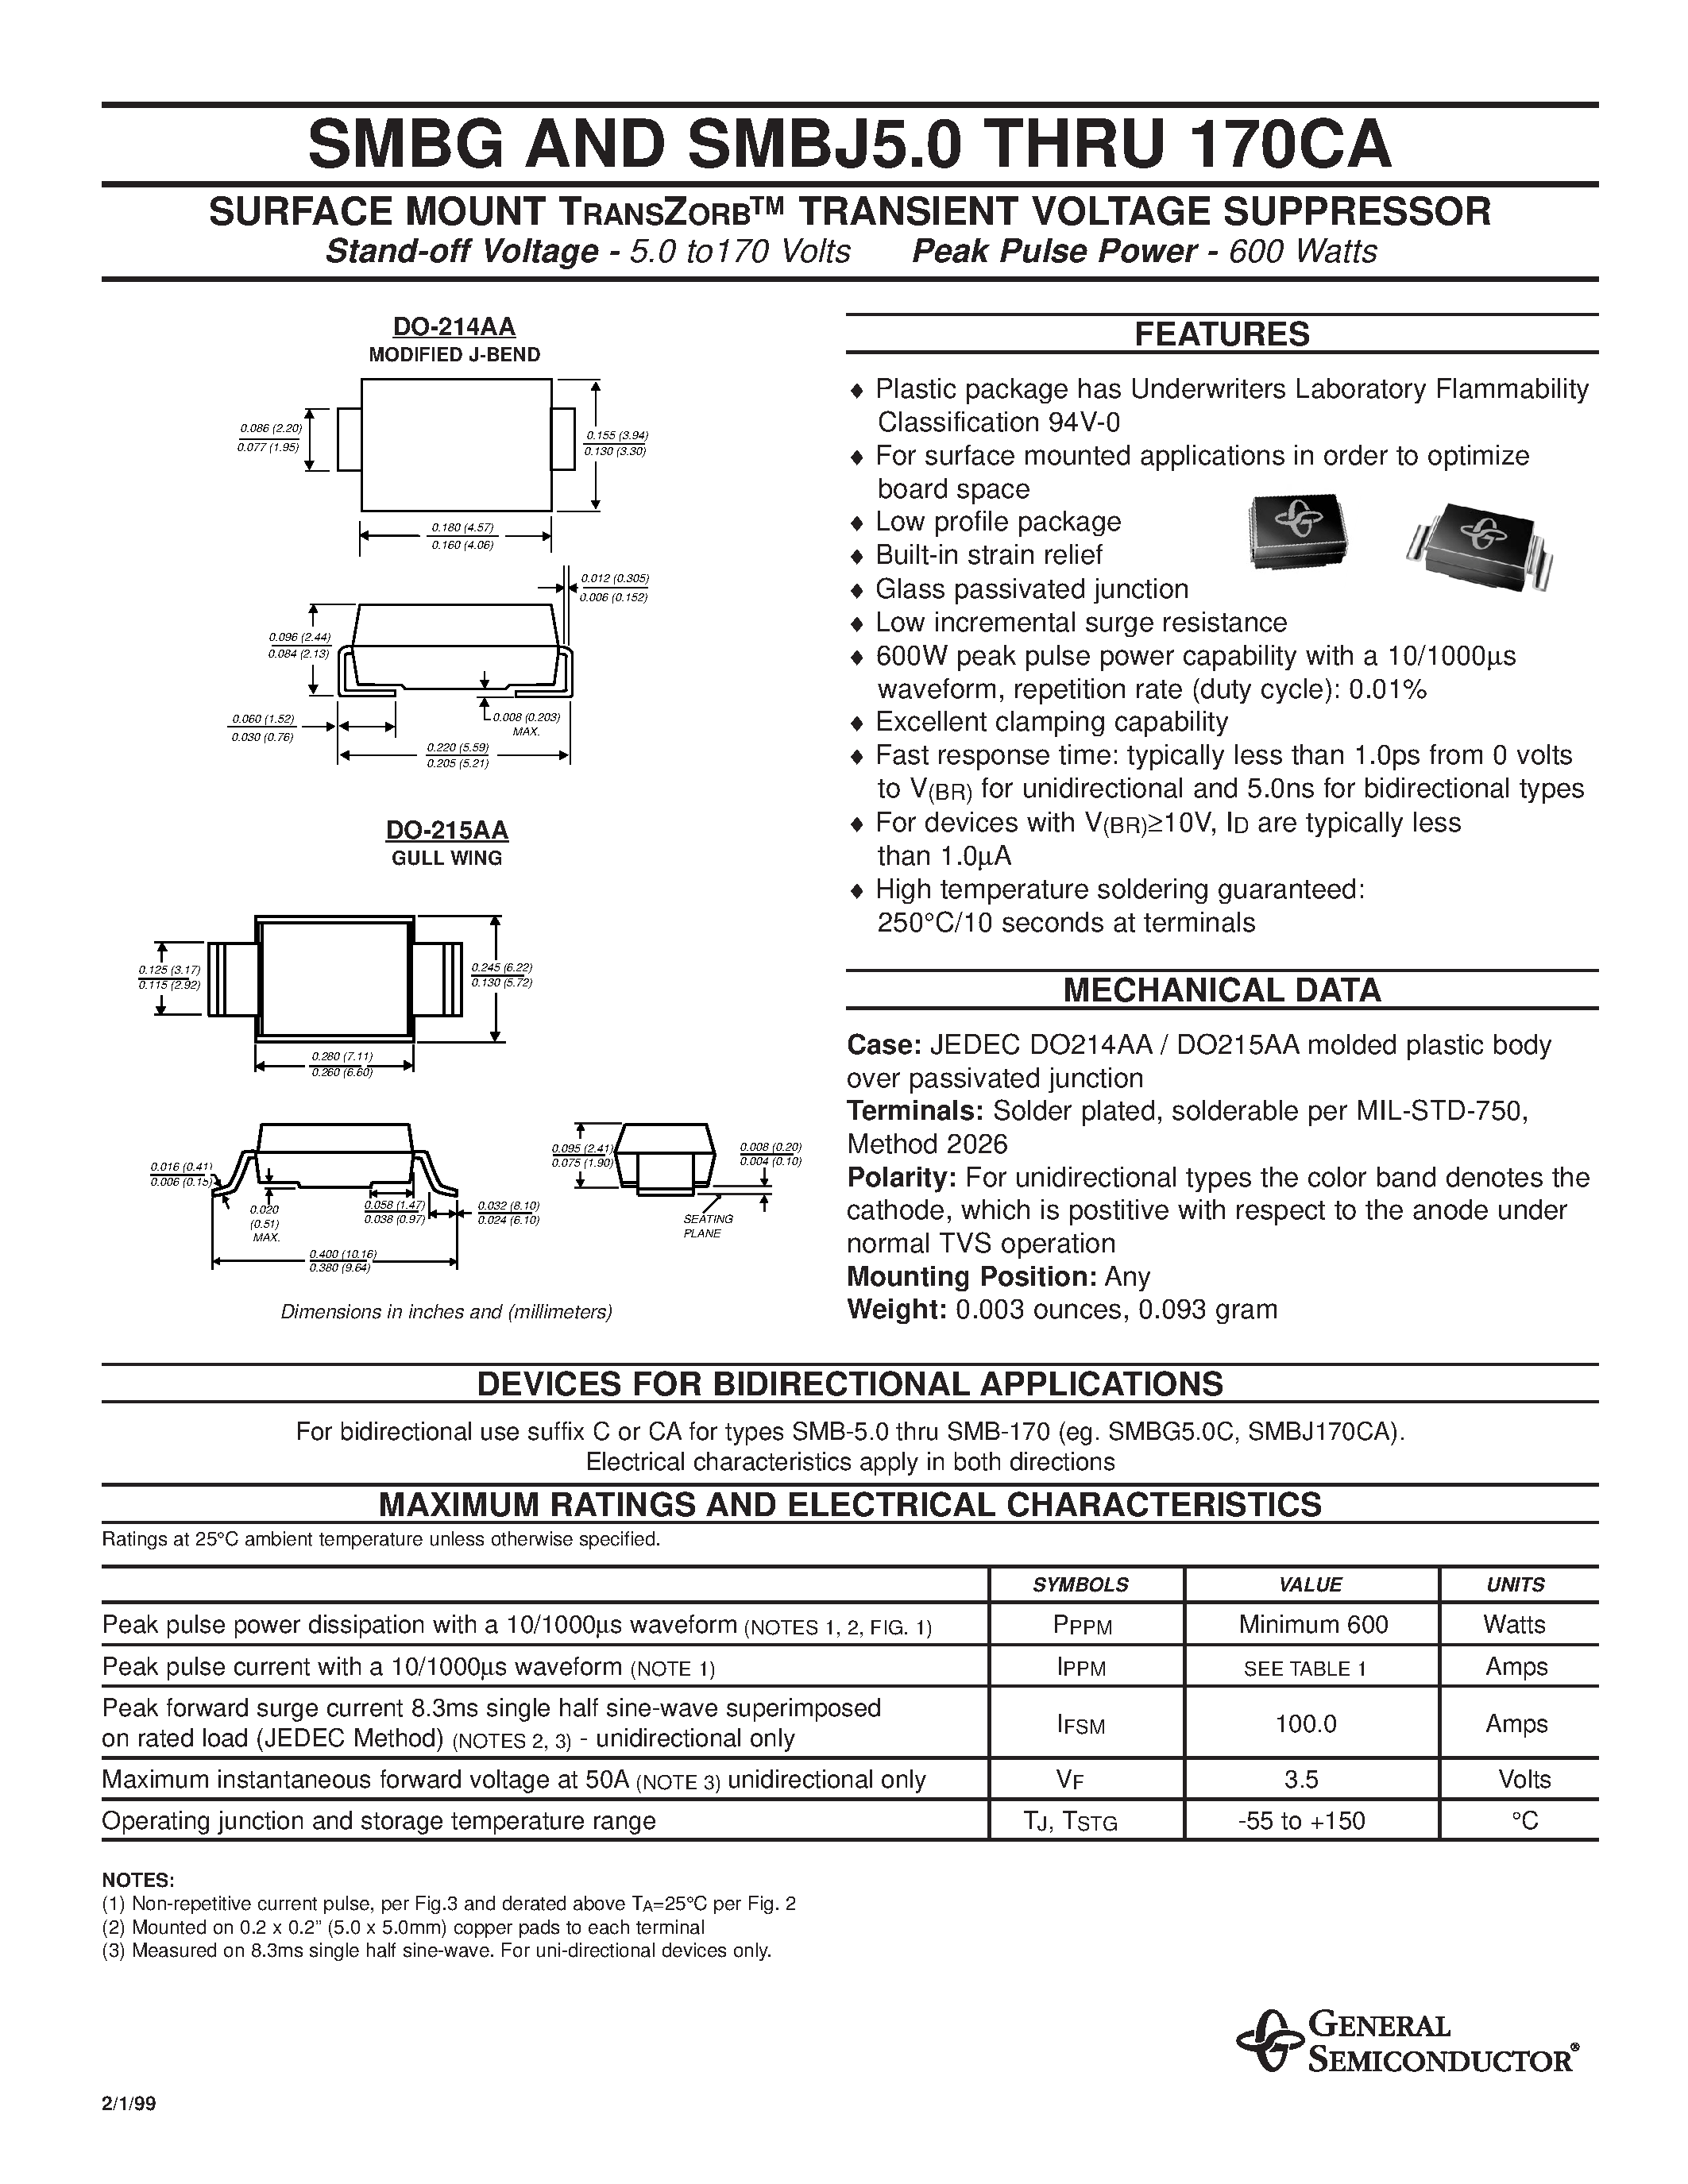 Даташит SMBJ40A - Transient Voltage Suppressors SMBJ5V0(C)A - SMBJ170(C)A страница 1